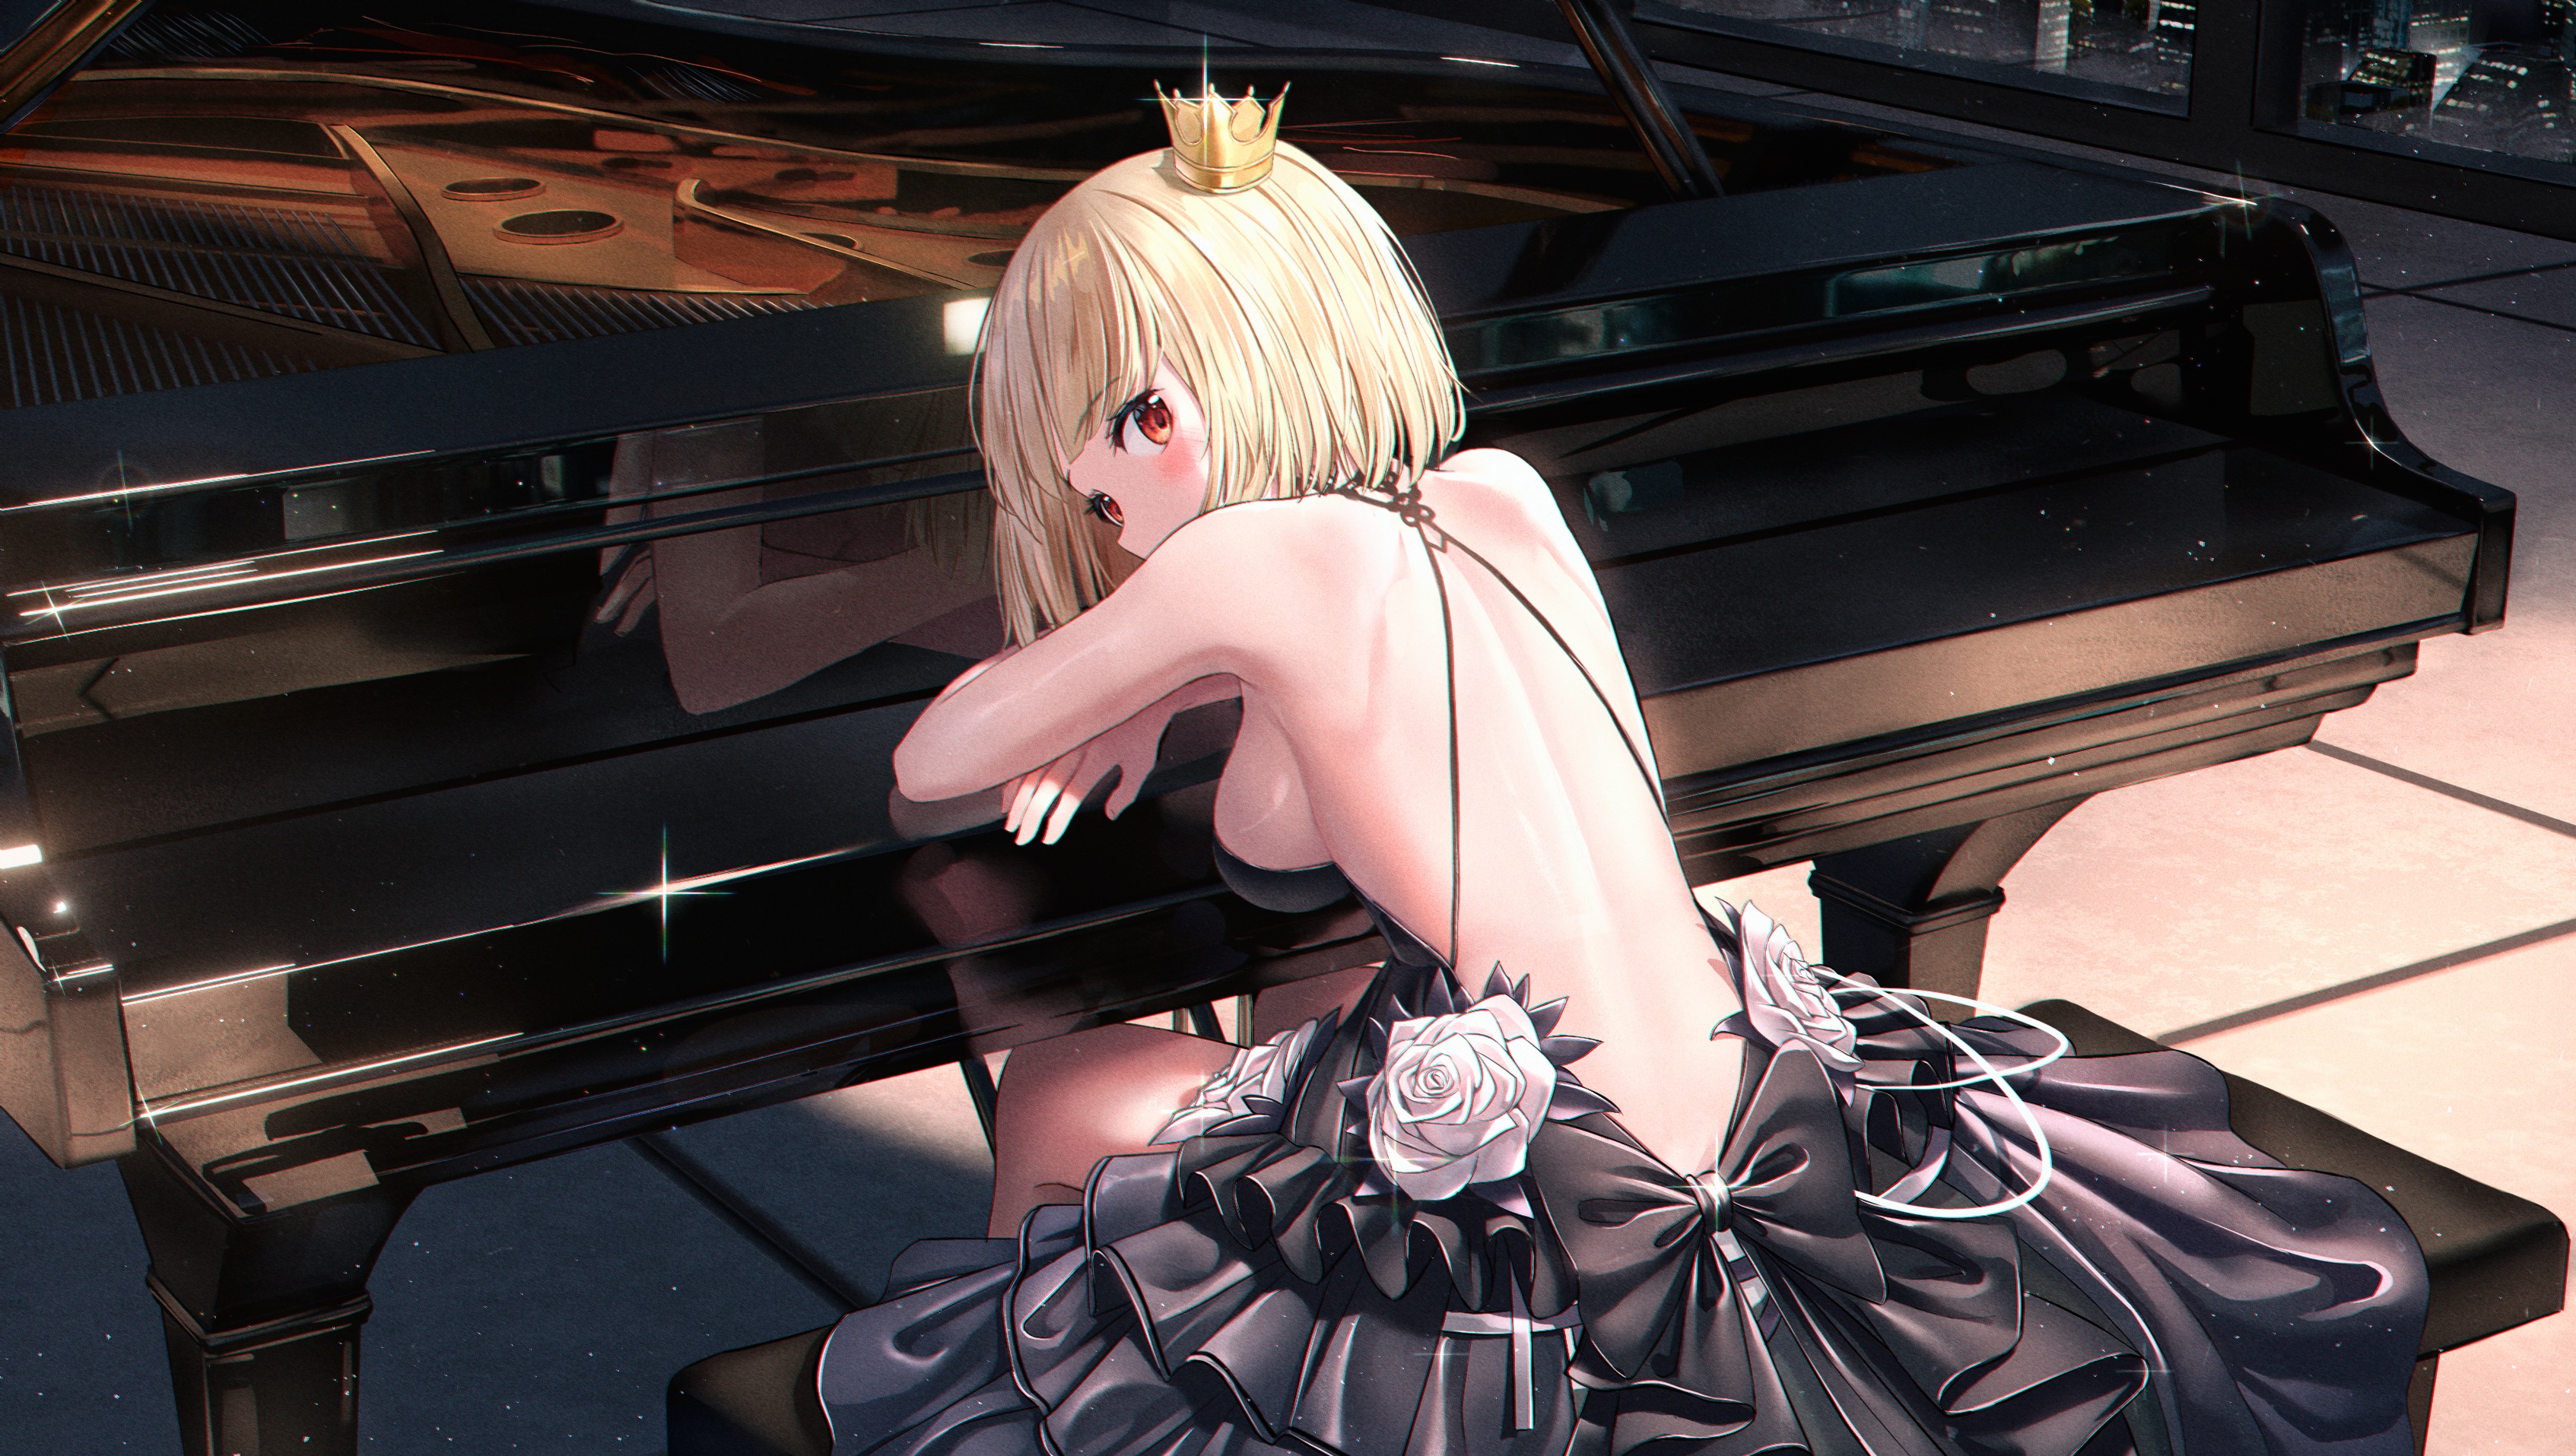 Anime 3387x1915 anime anime girls piano dress bareback sideboob short hair blonde red eyes artwork Nay musical instrument